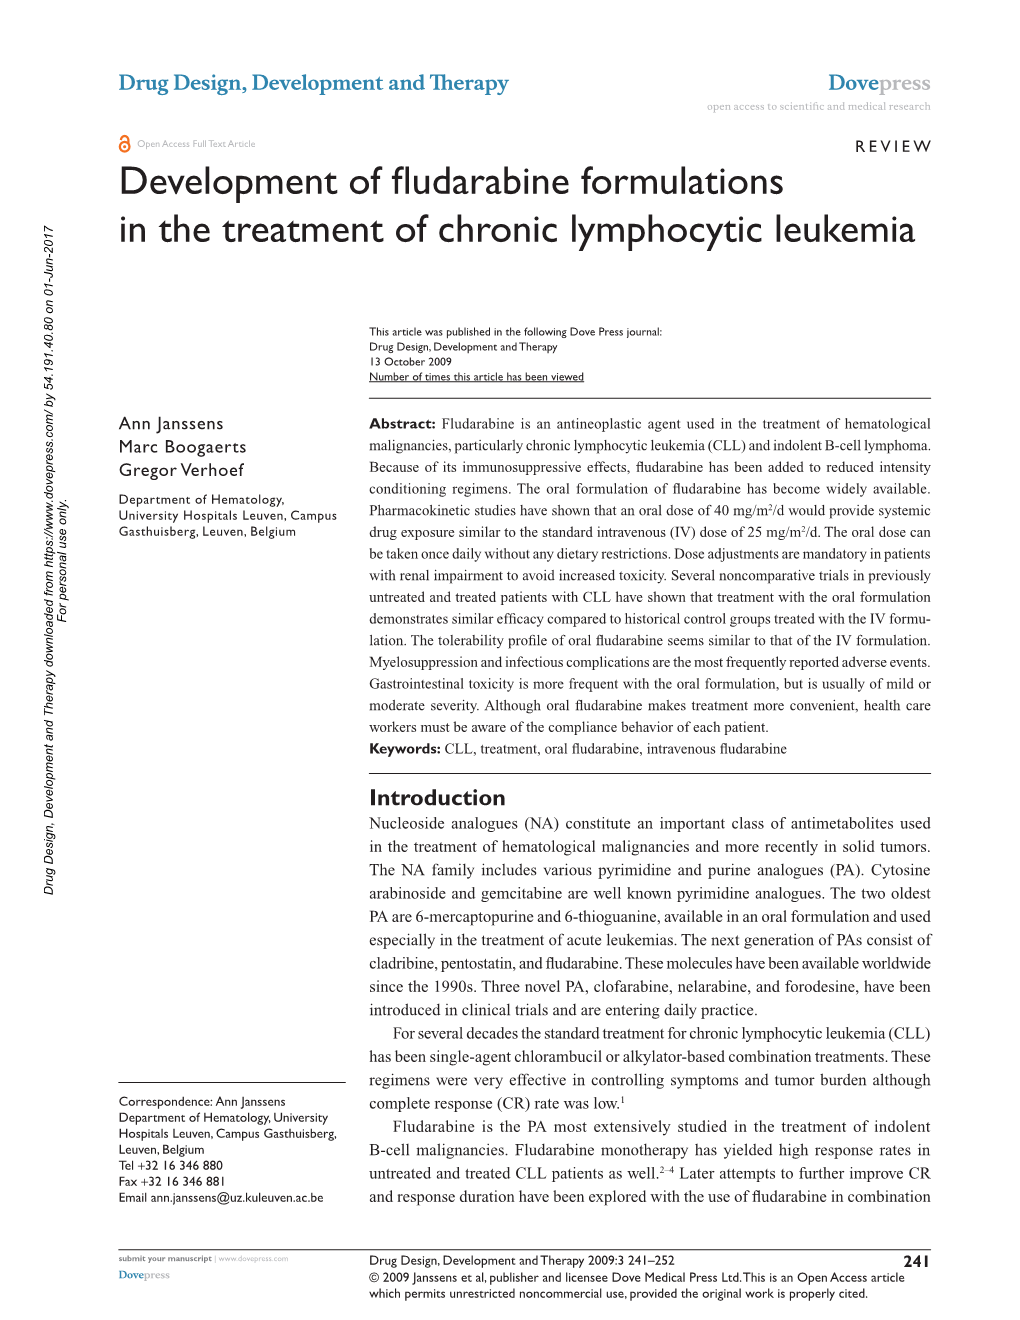 Development of Fludarabine Formulations in the Treatment of Chronic Lymphocytic Leukemia